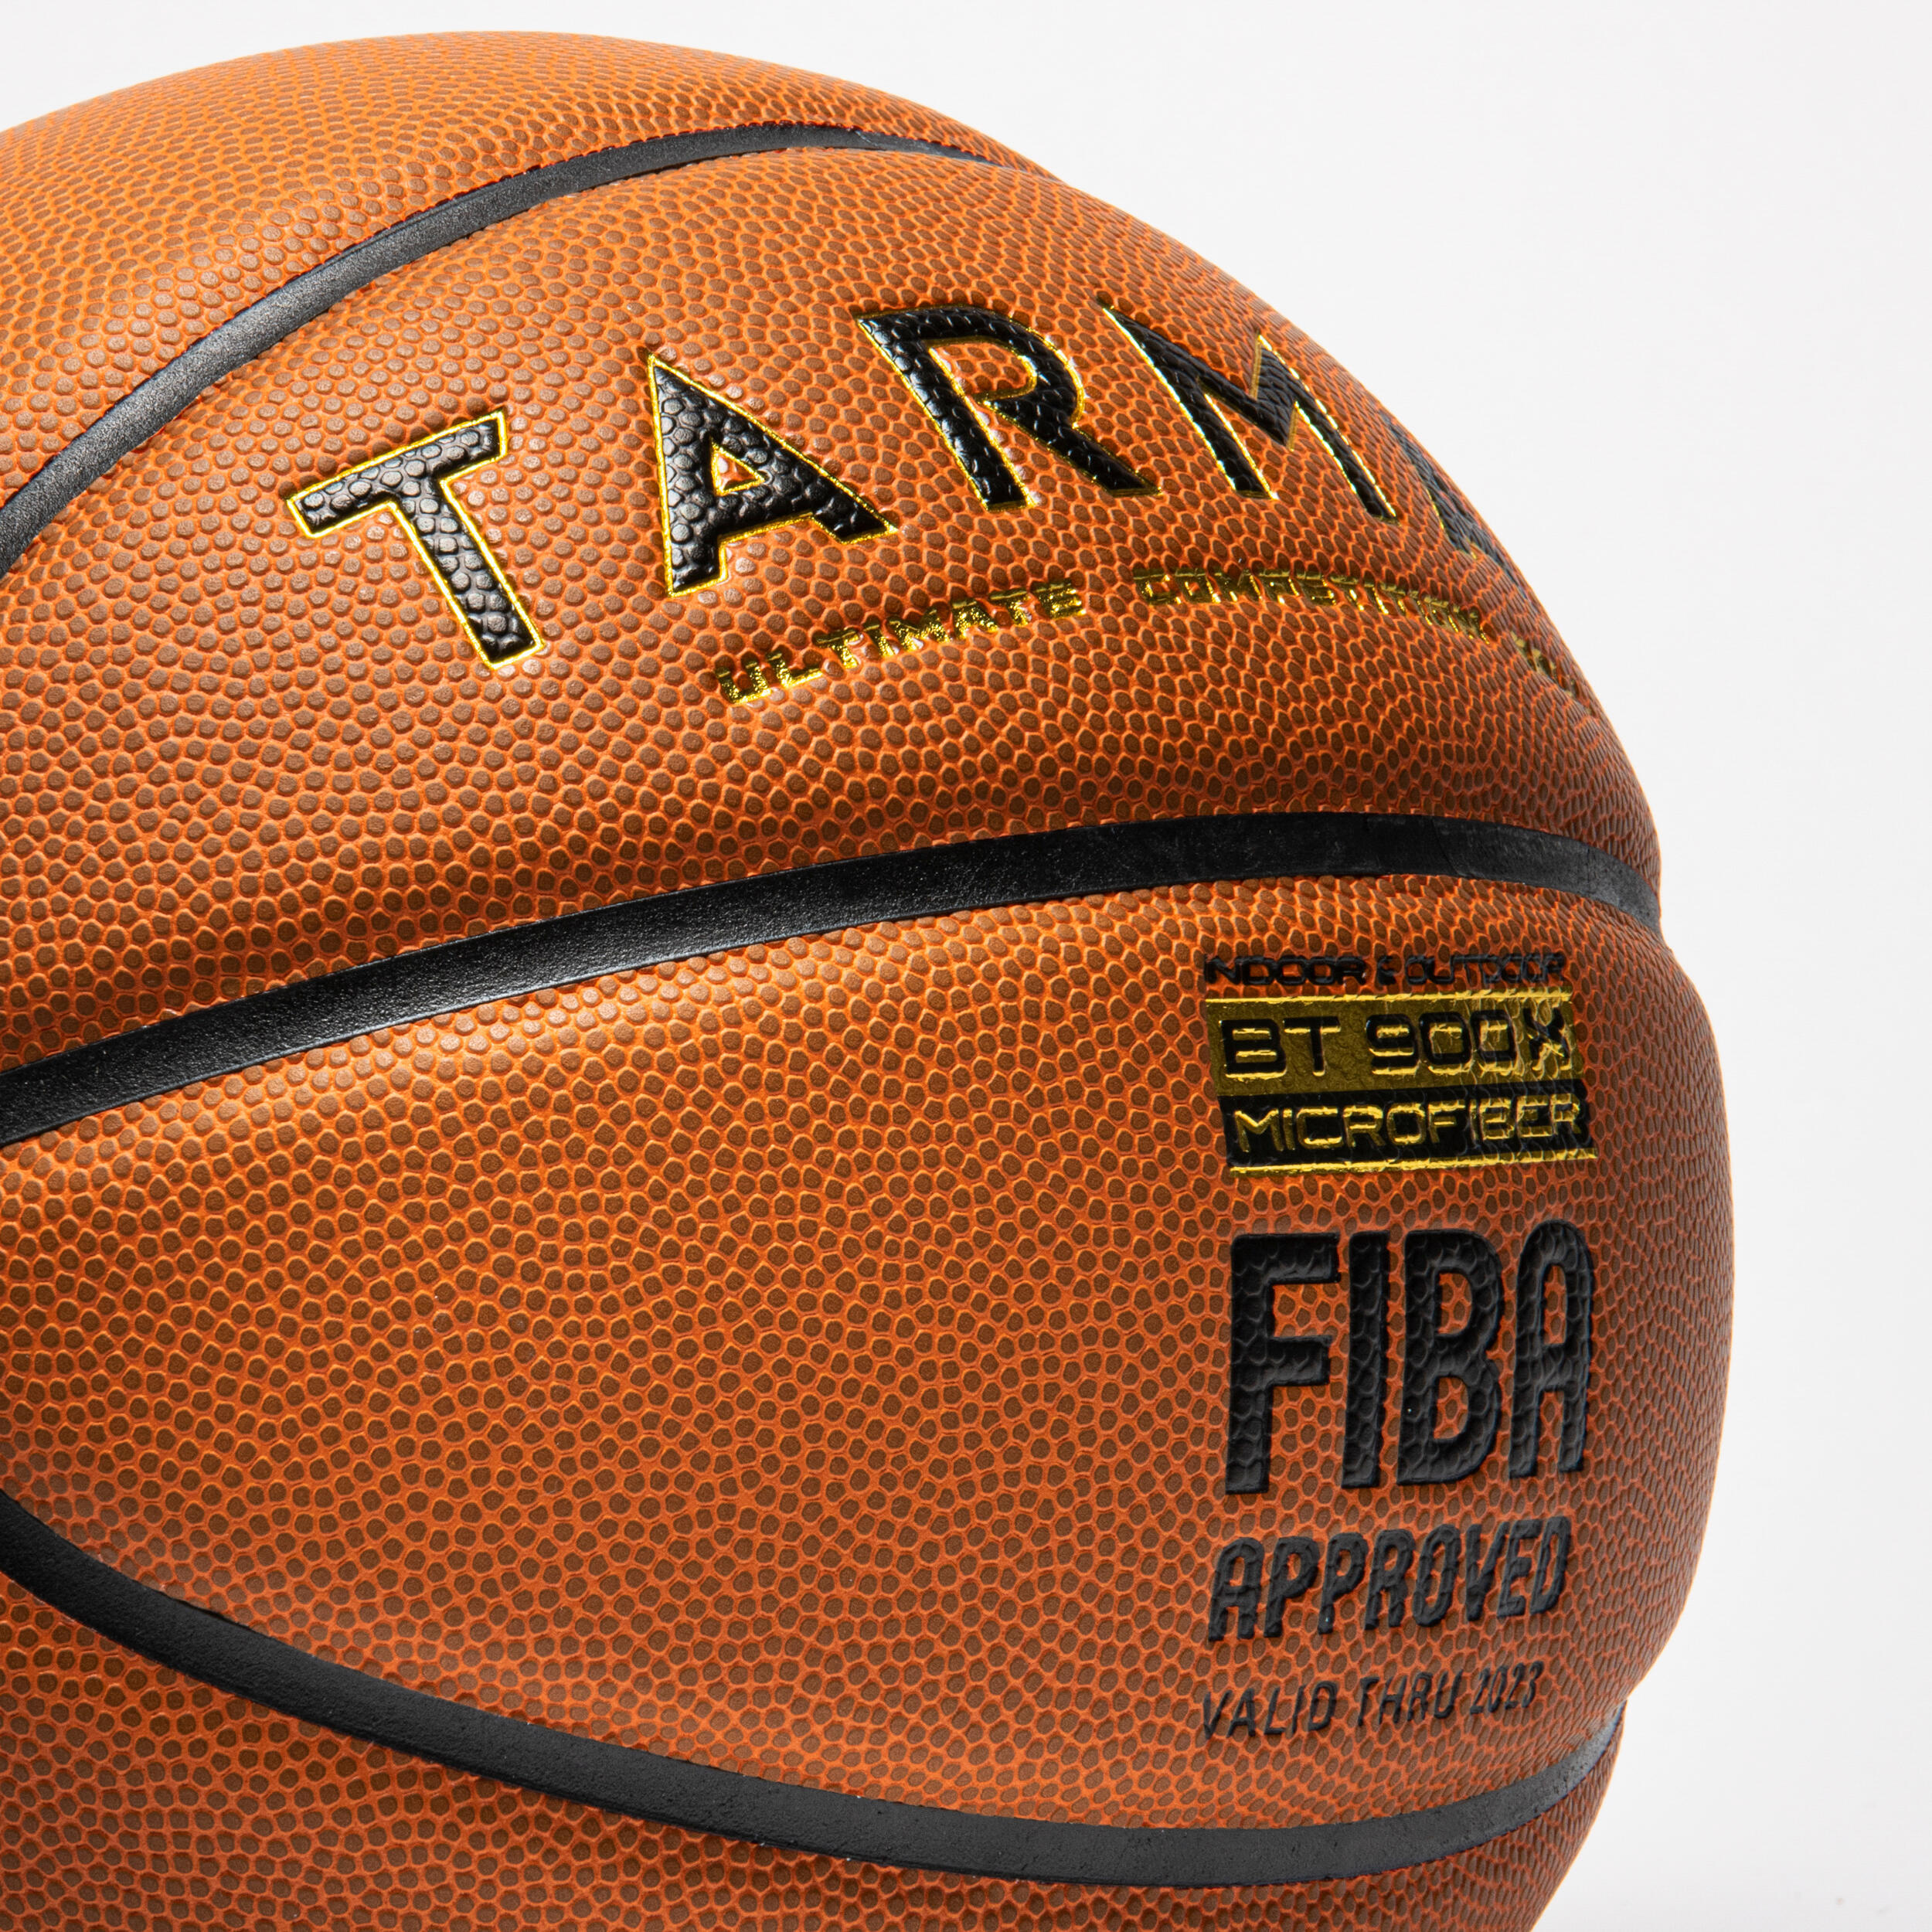 Size 7 FIBA Basketball BT900 Grip - Orange 6/7